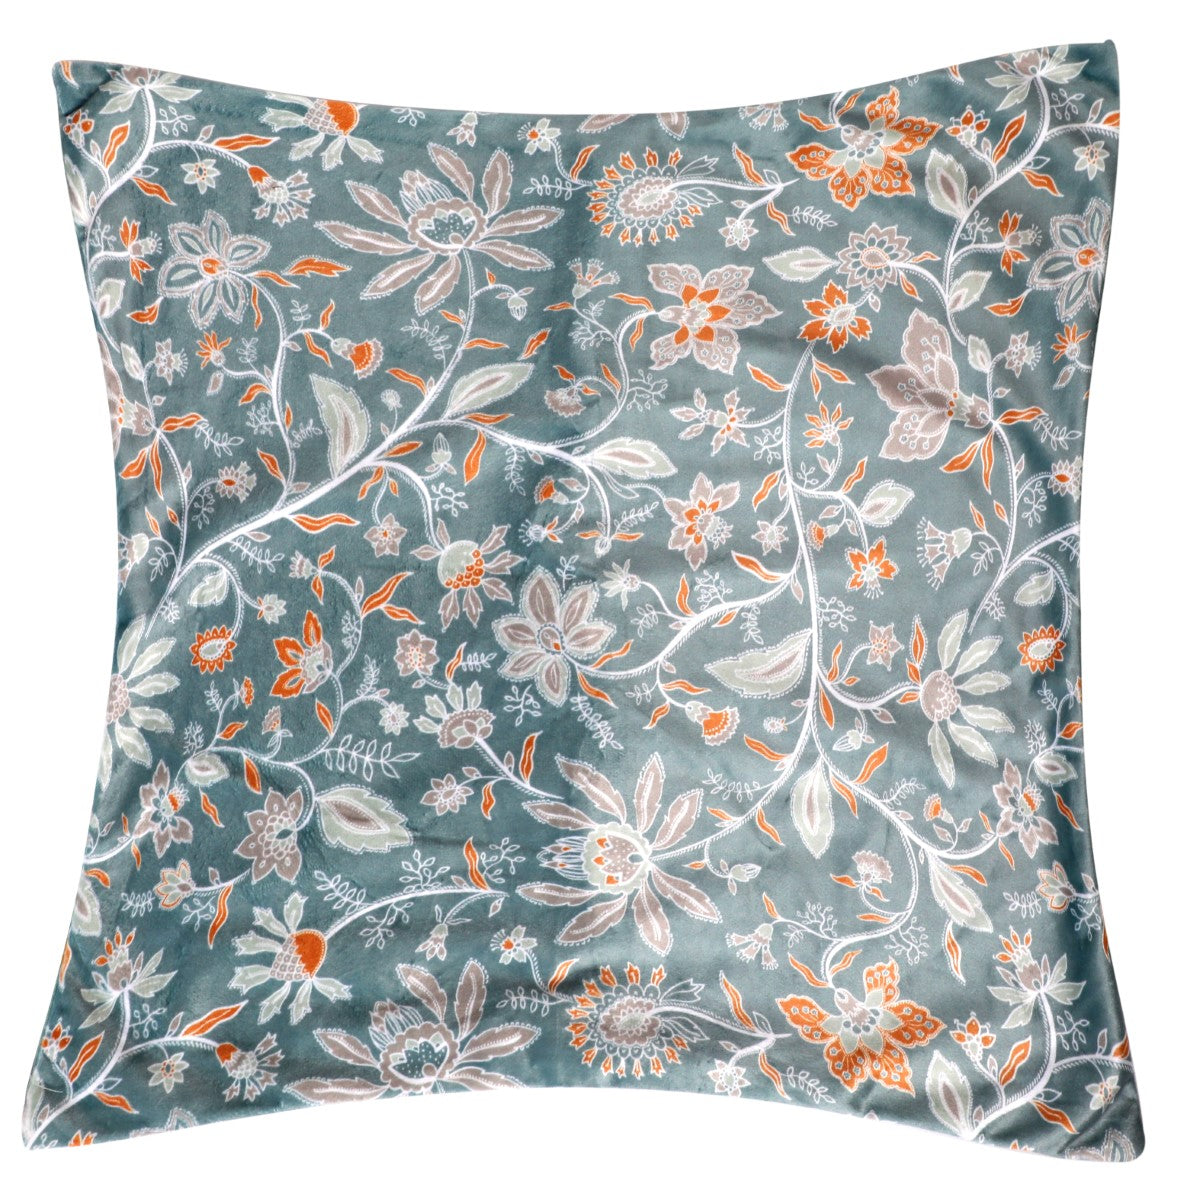 Mint Floral A Cushion Cover 18x18"